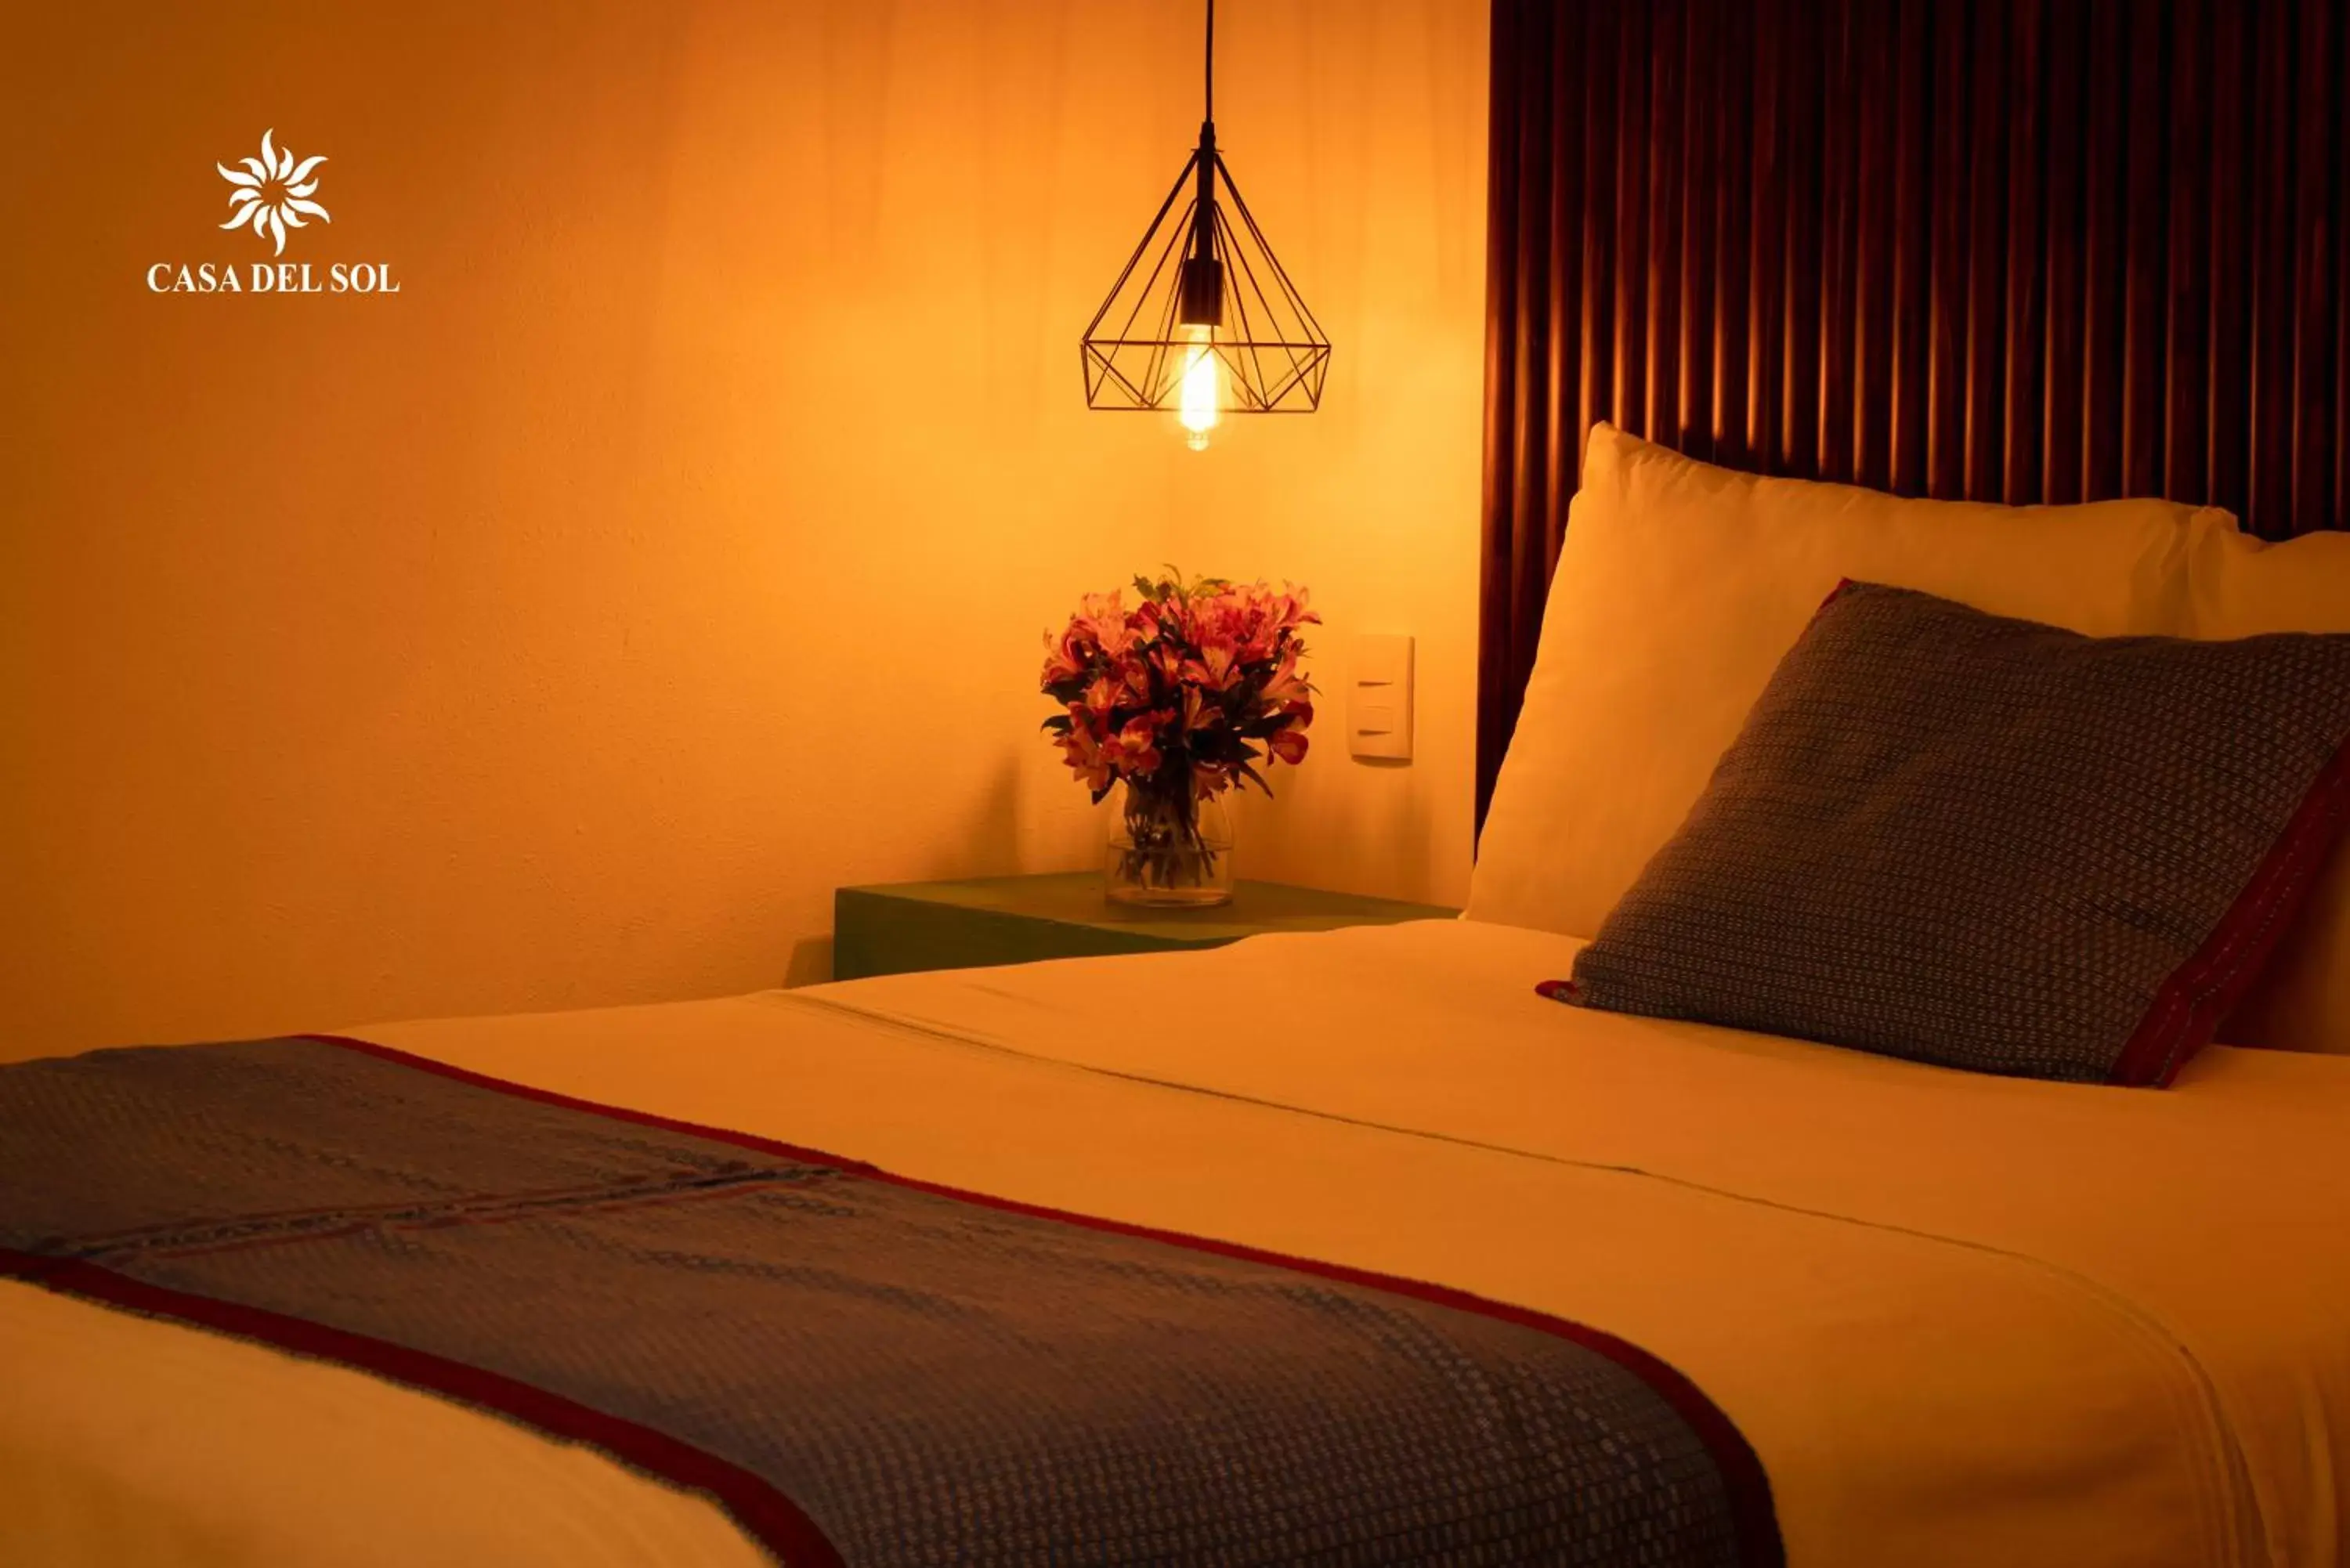 Decorative detail, Bed in Hotel Casa del Sol